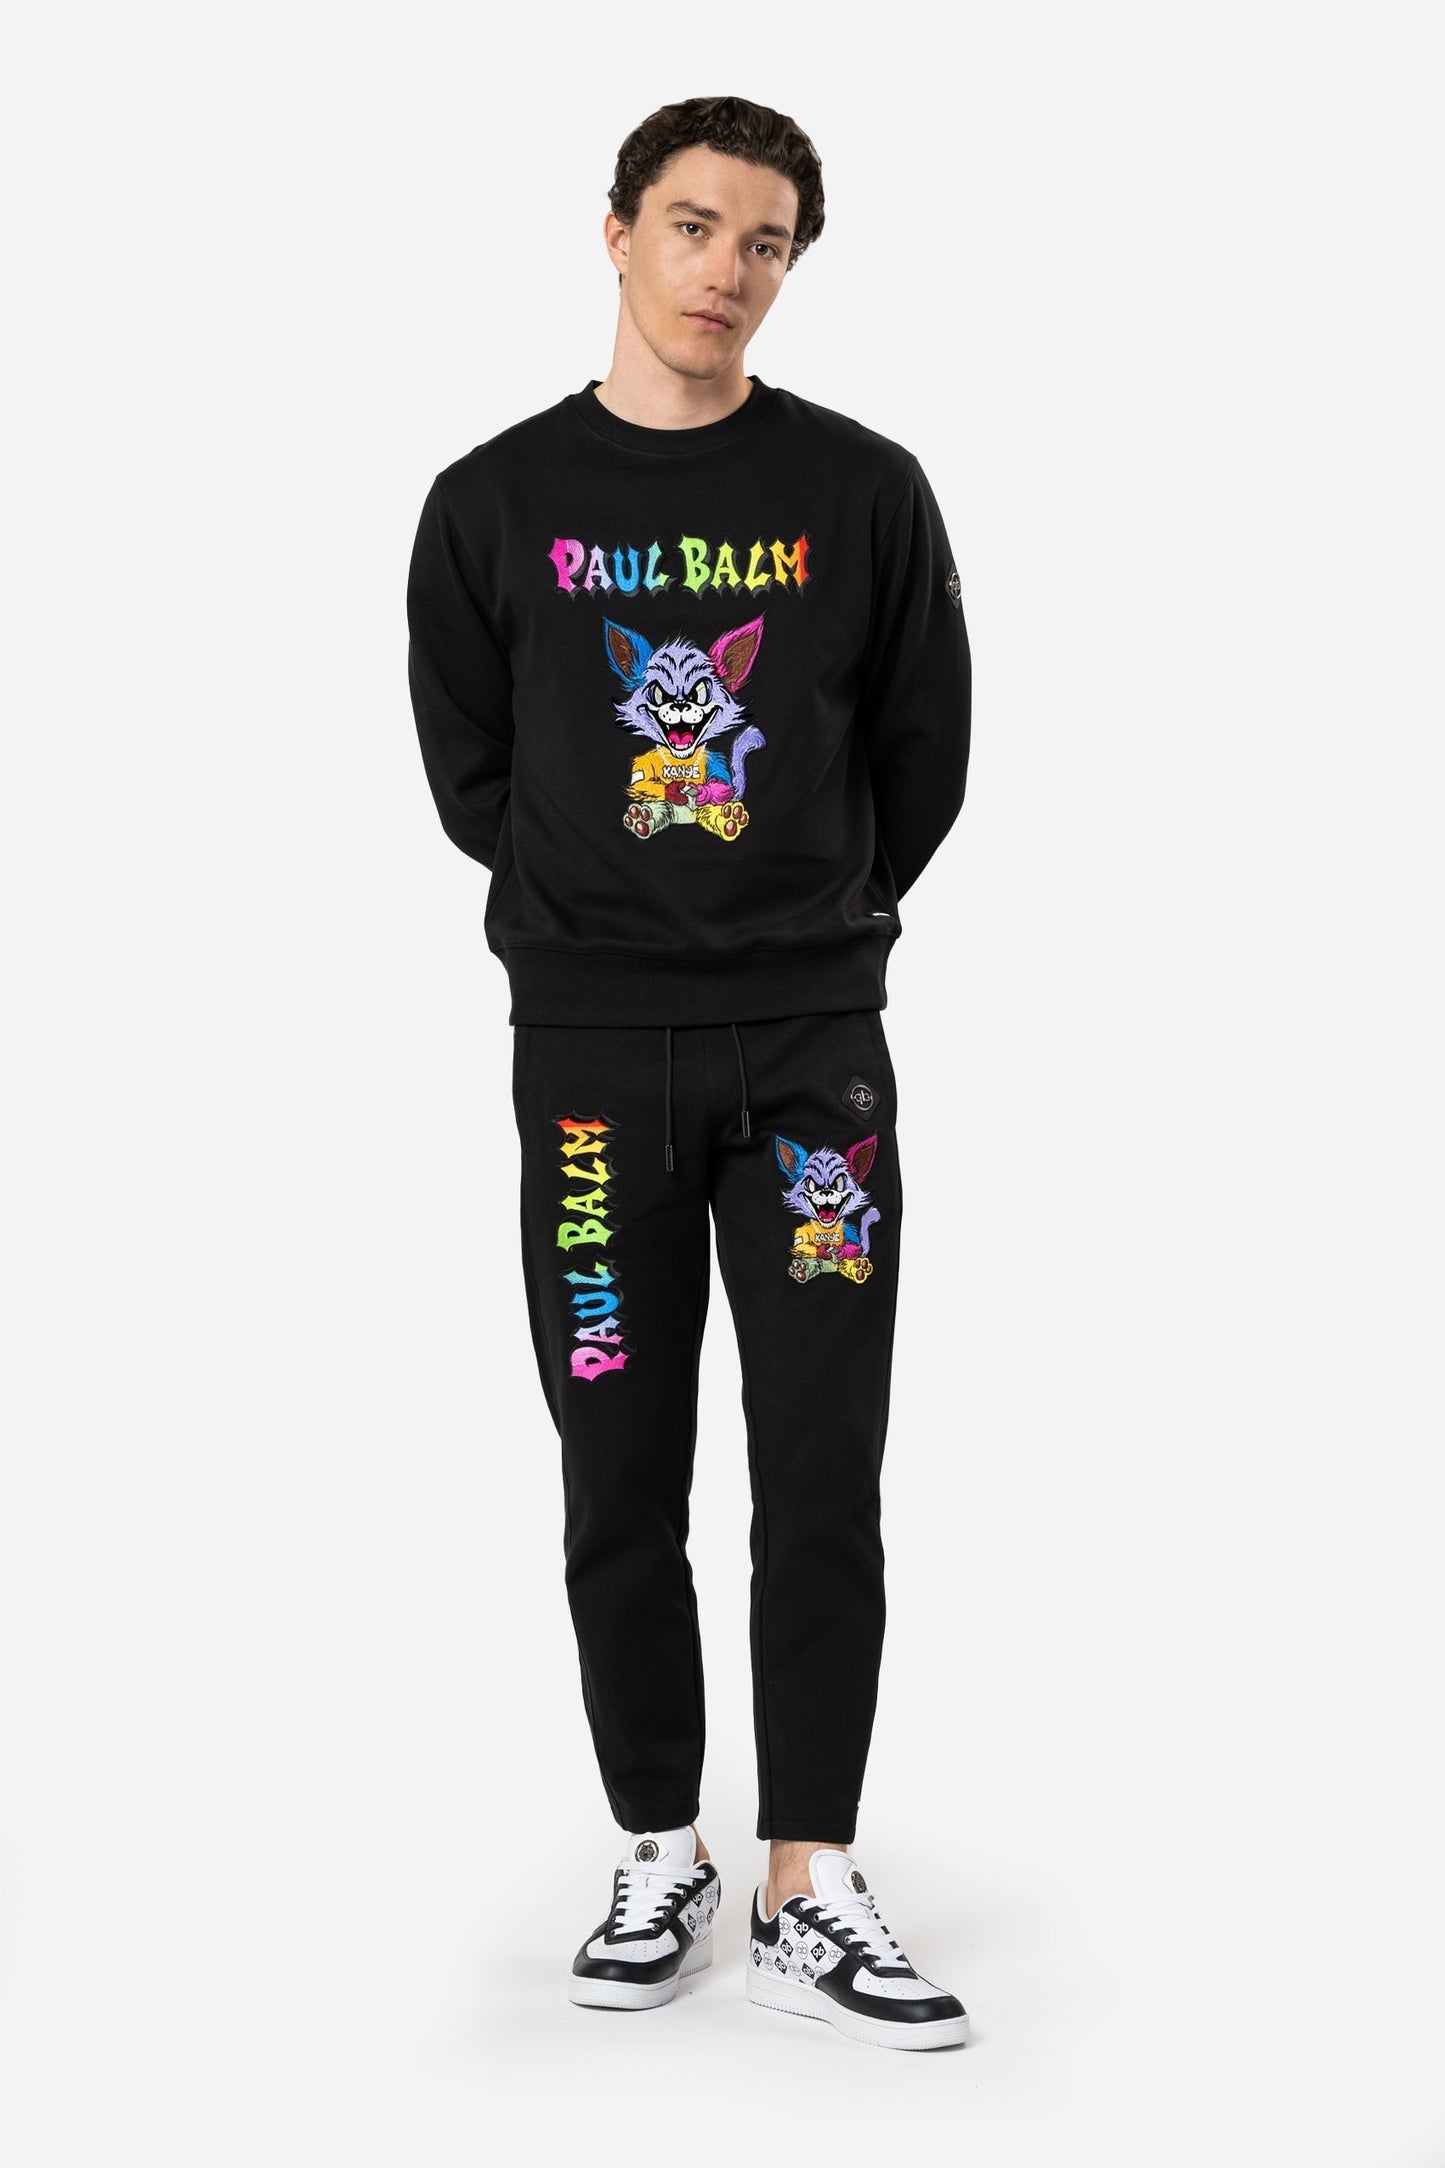 Embroidered Rainbow Kanye Sweatshirt - Limited to 300 - PAUL BALM WORLD